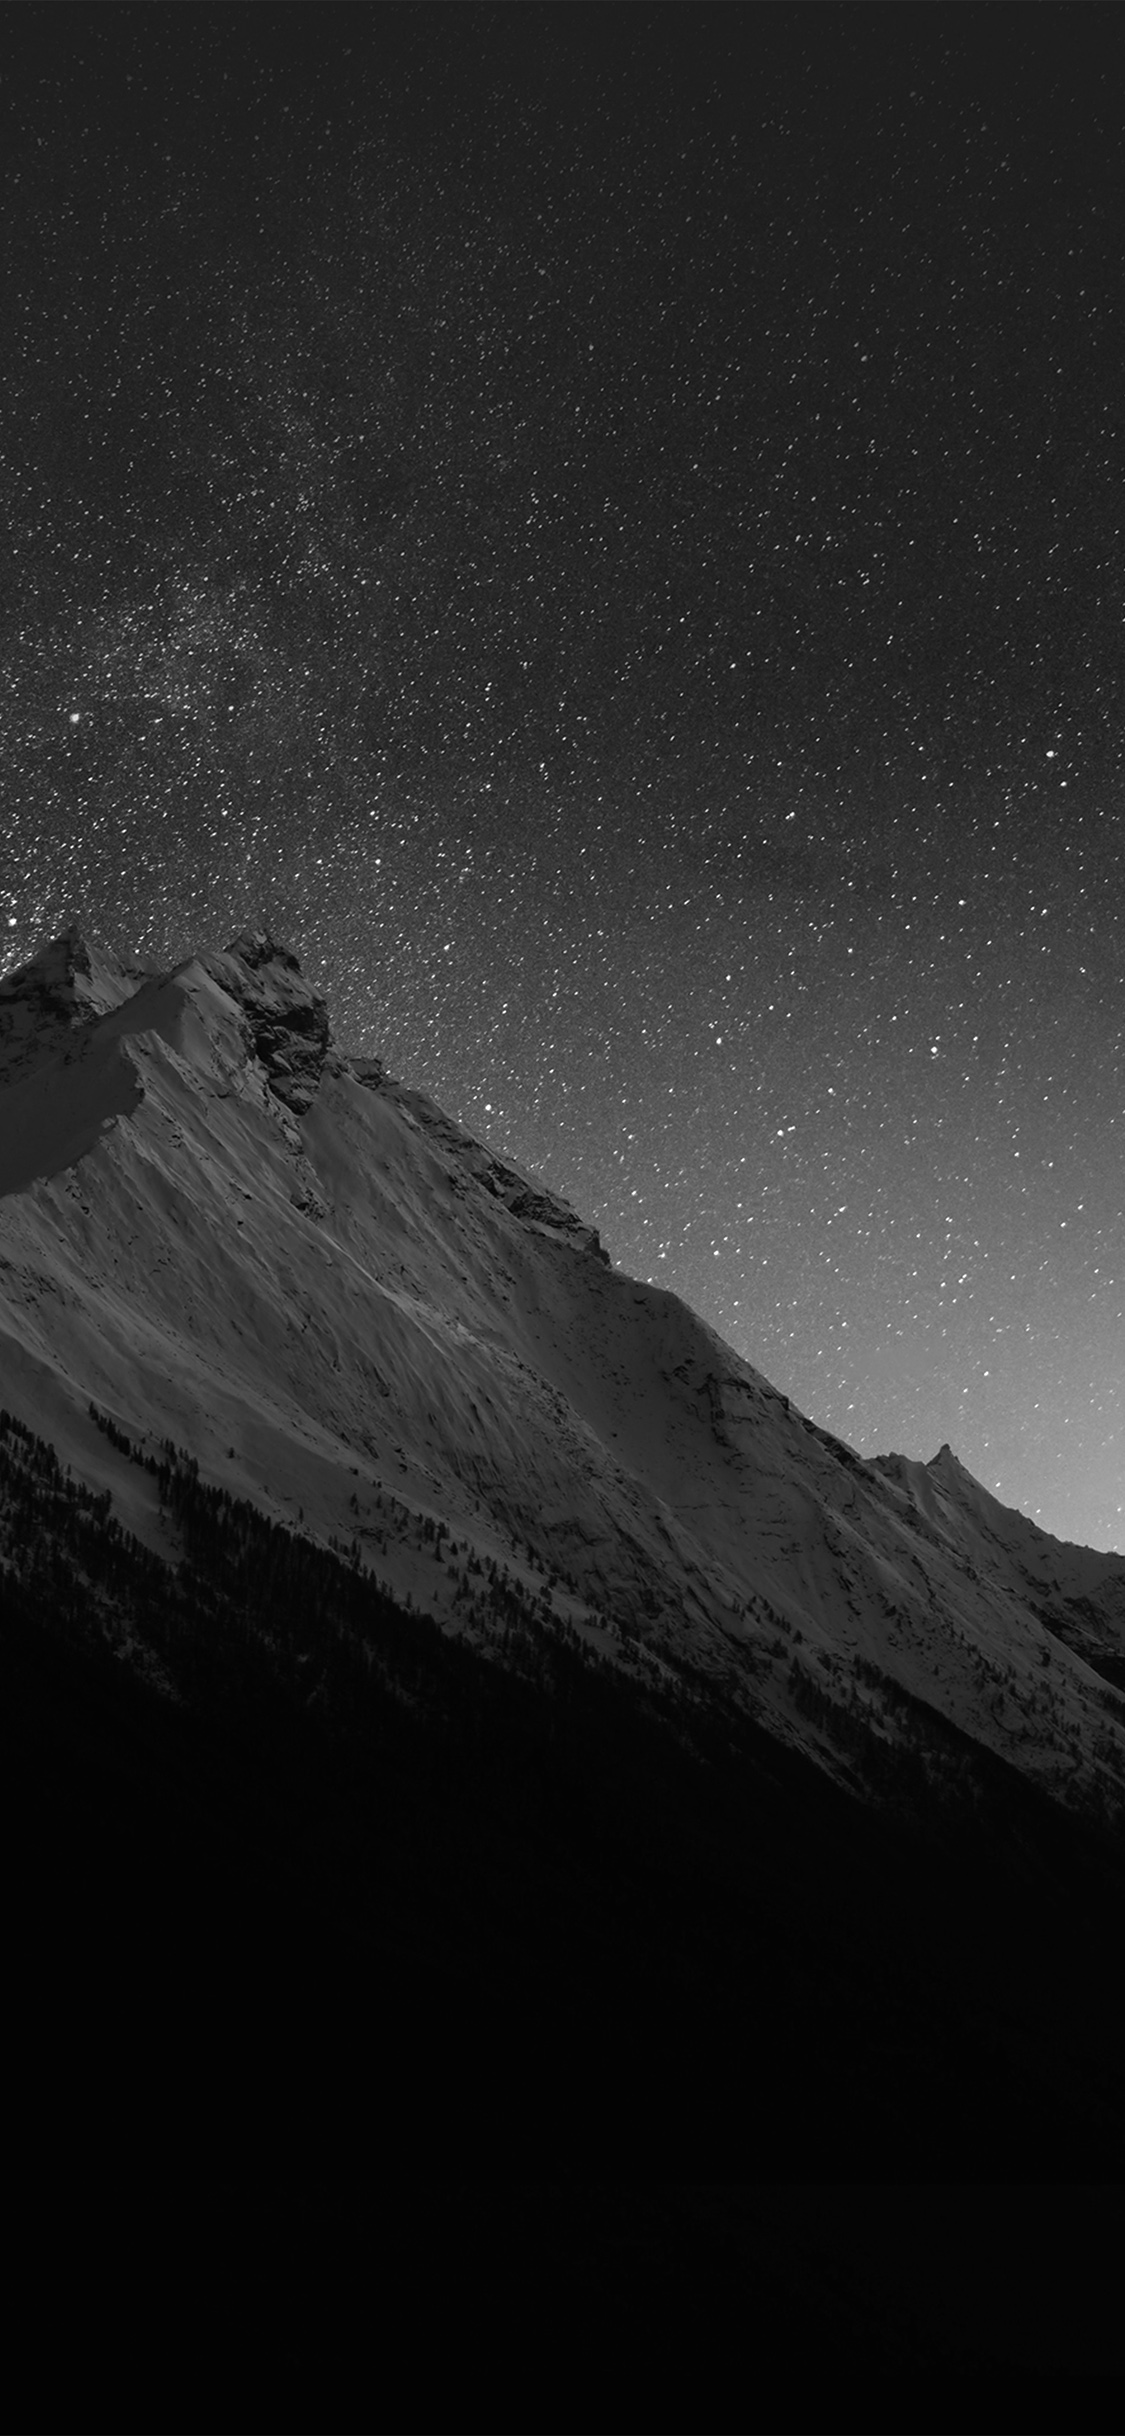 iPhone X wallpaper. mountain night snow dark star bw